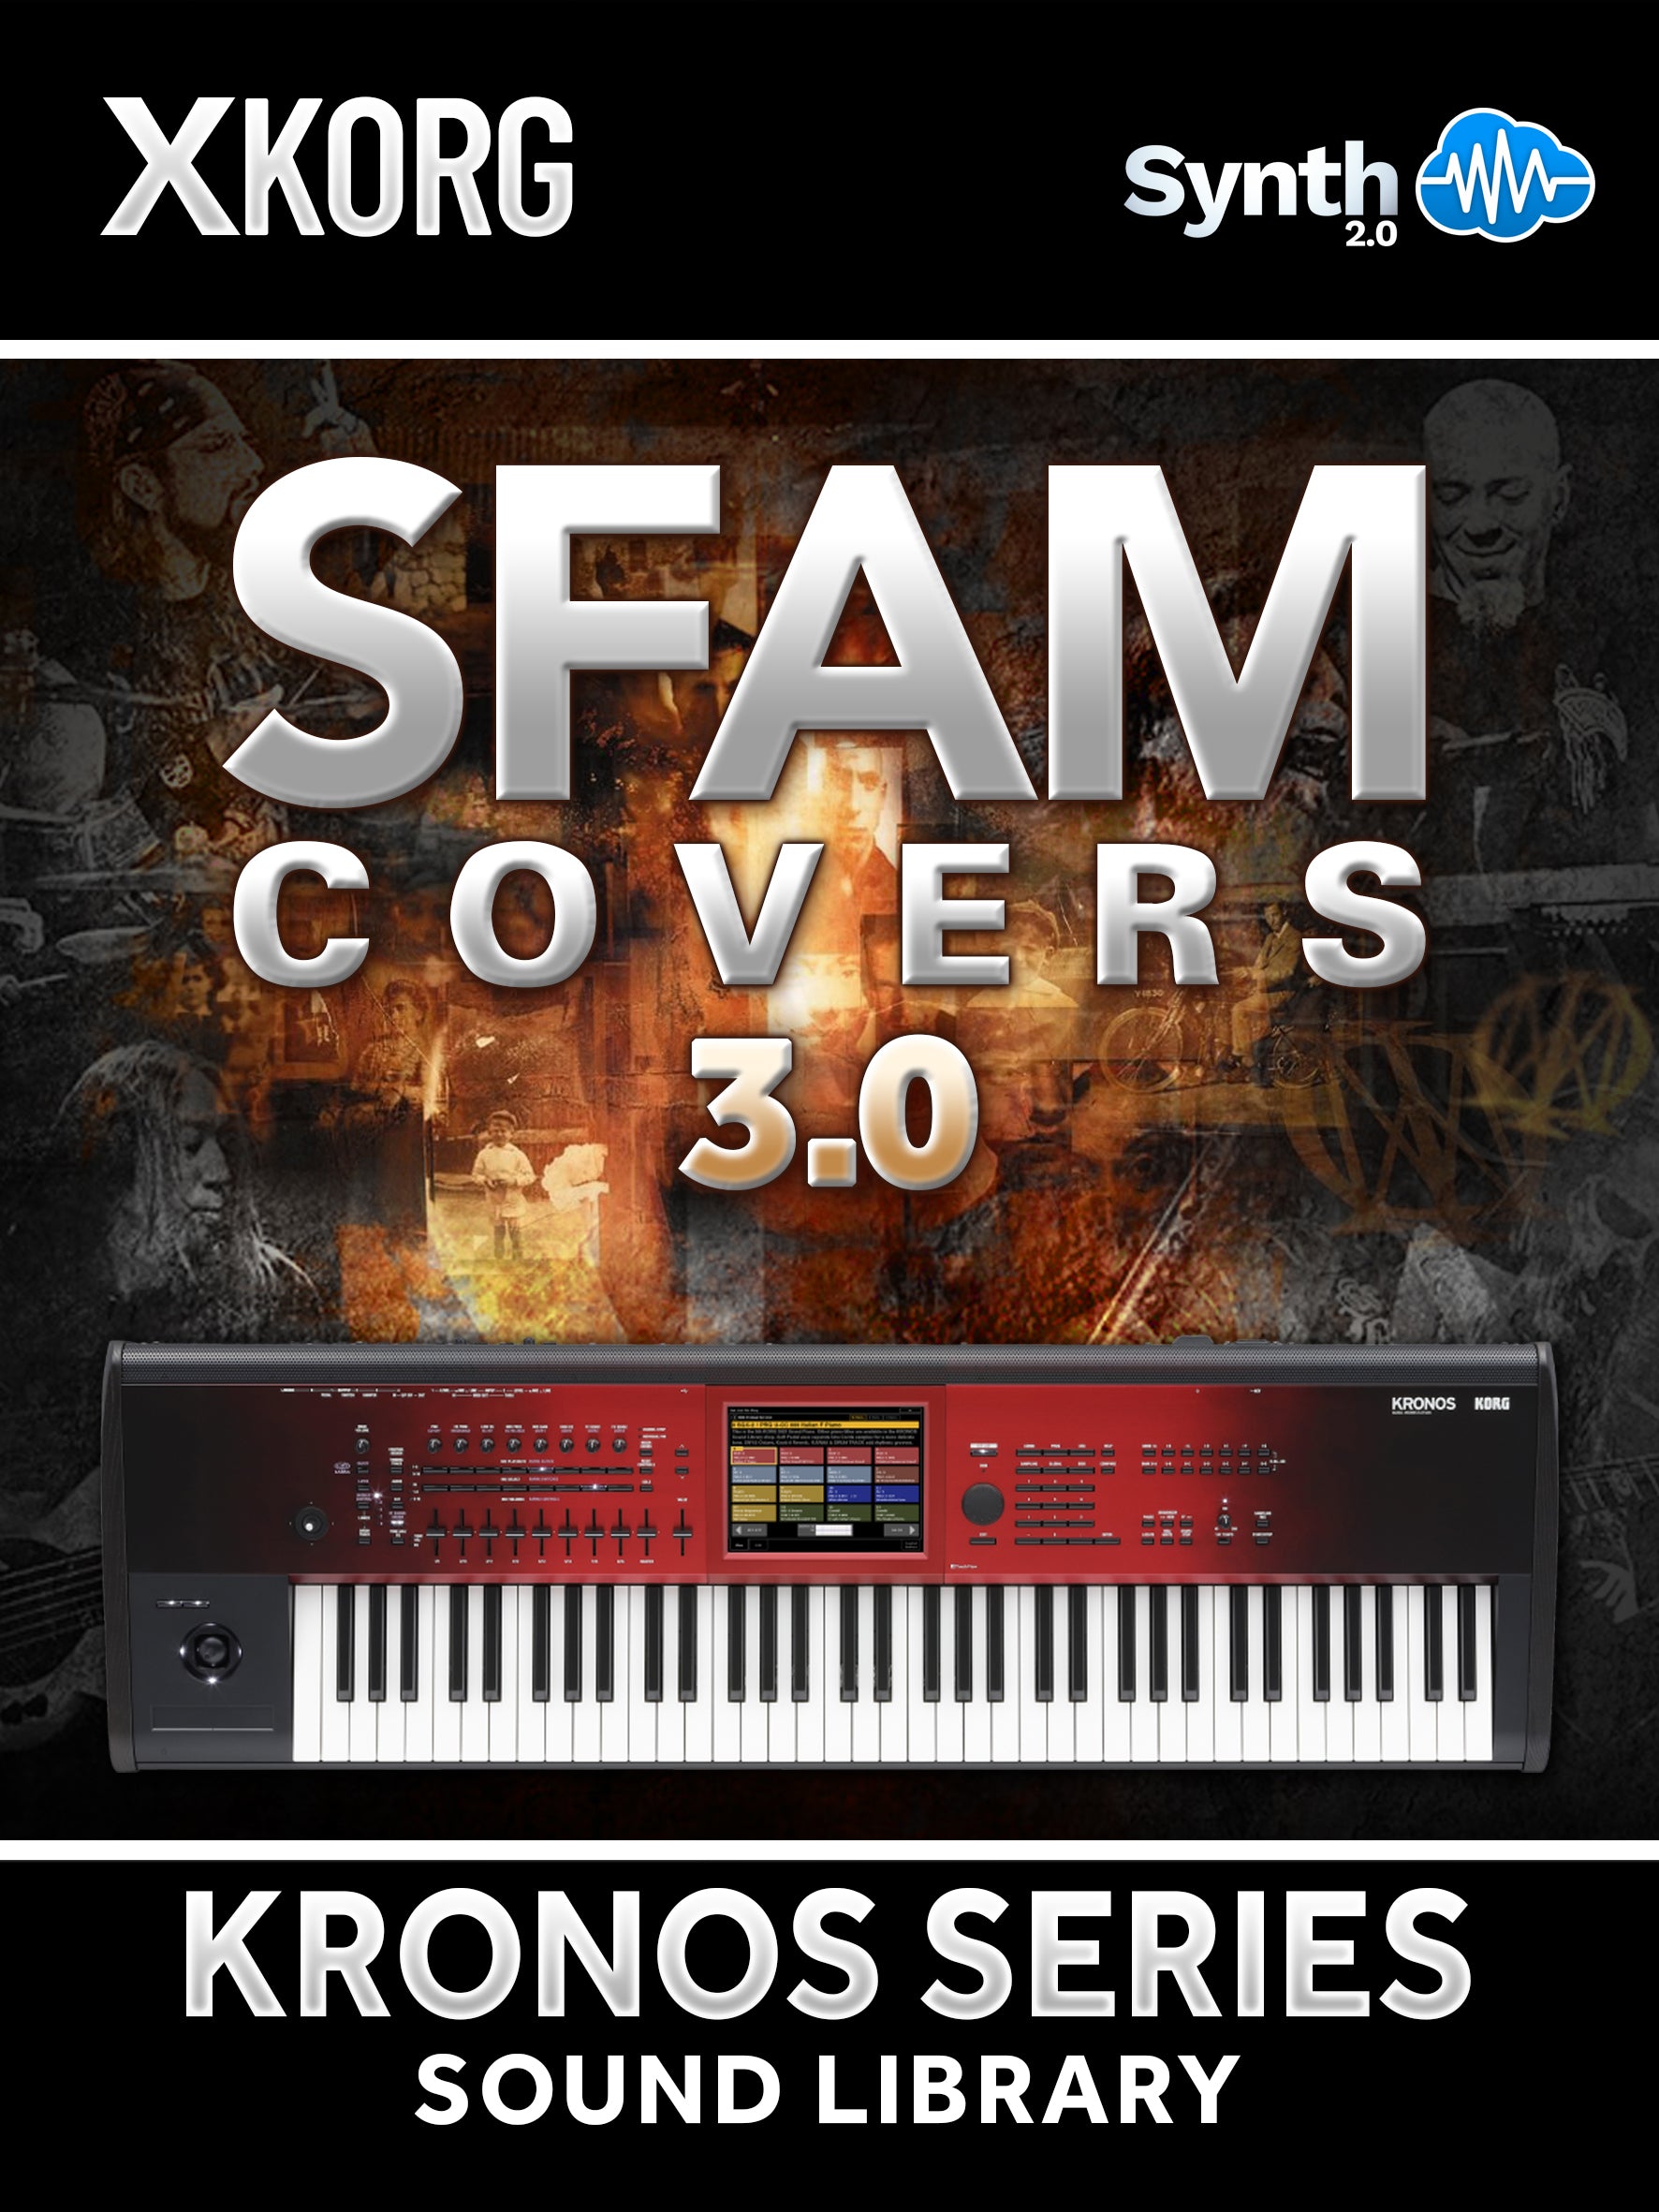 LDX226 - ( Bundle ) - Sfam Covers 3.0 + I&W Covers - Korg Kronos Series